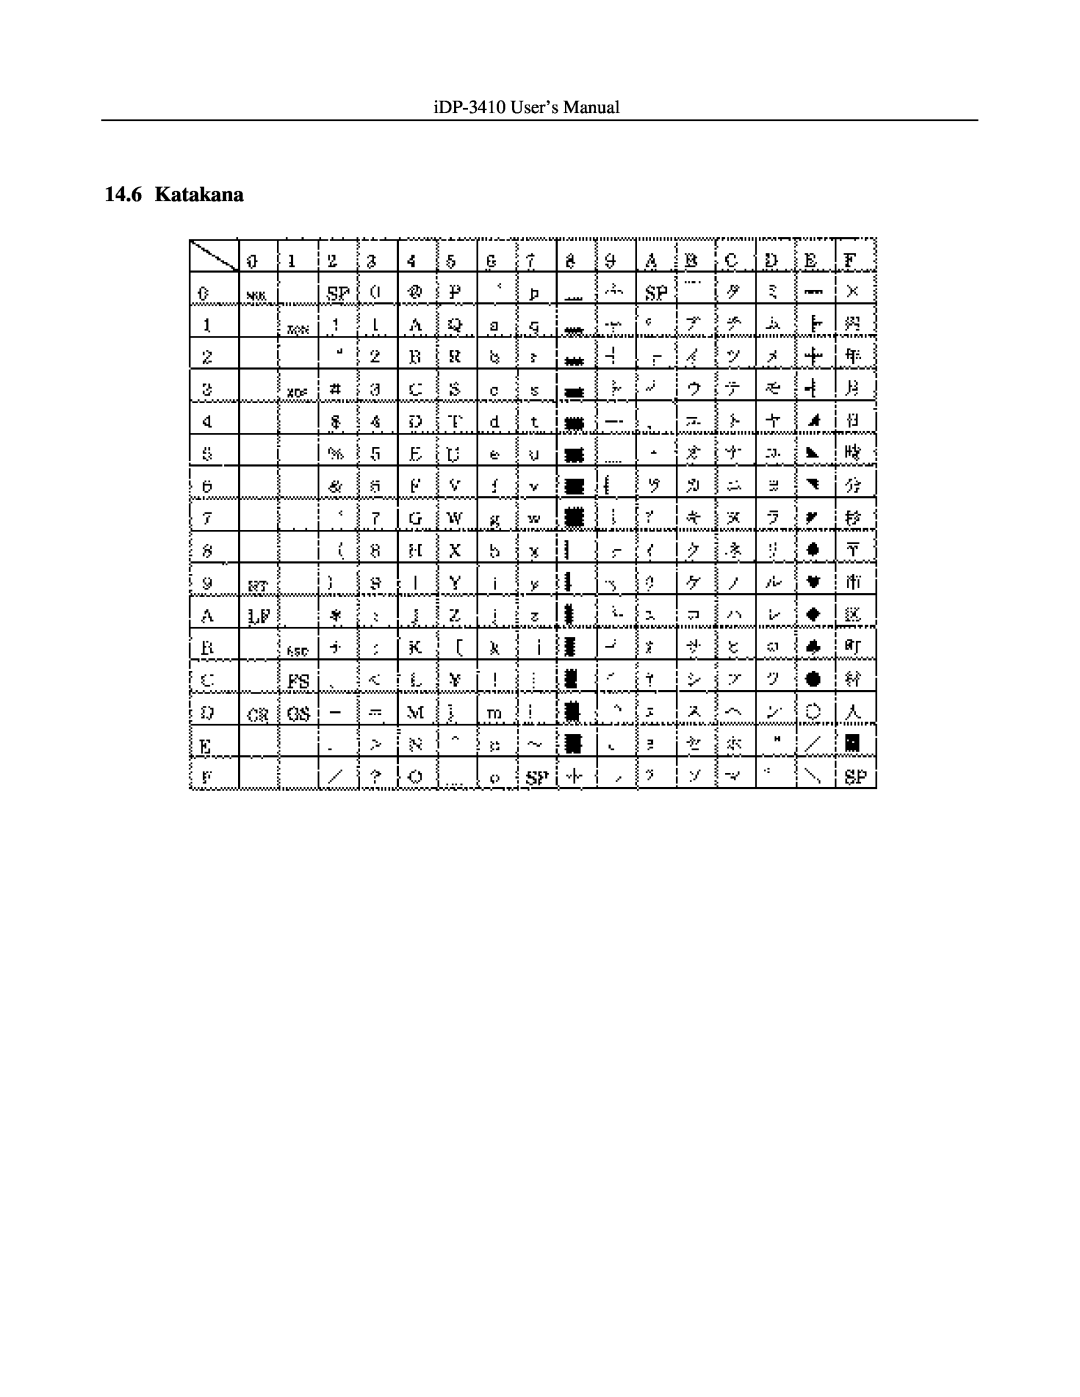 Addlogix user manual Katakana, iDP-3410 User’s Manual 